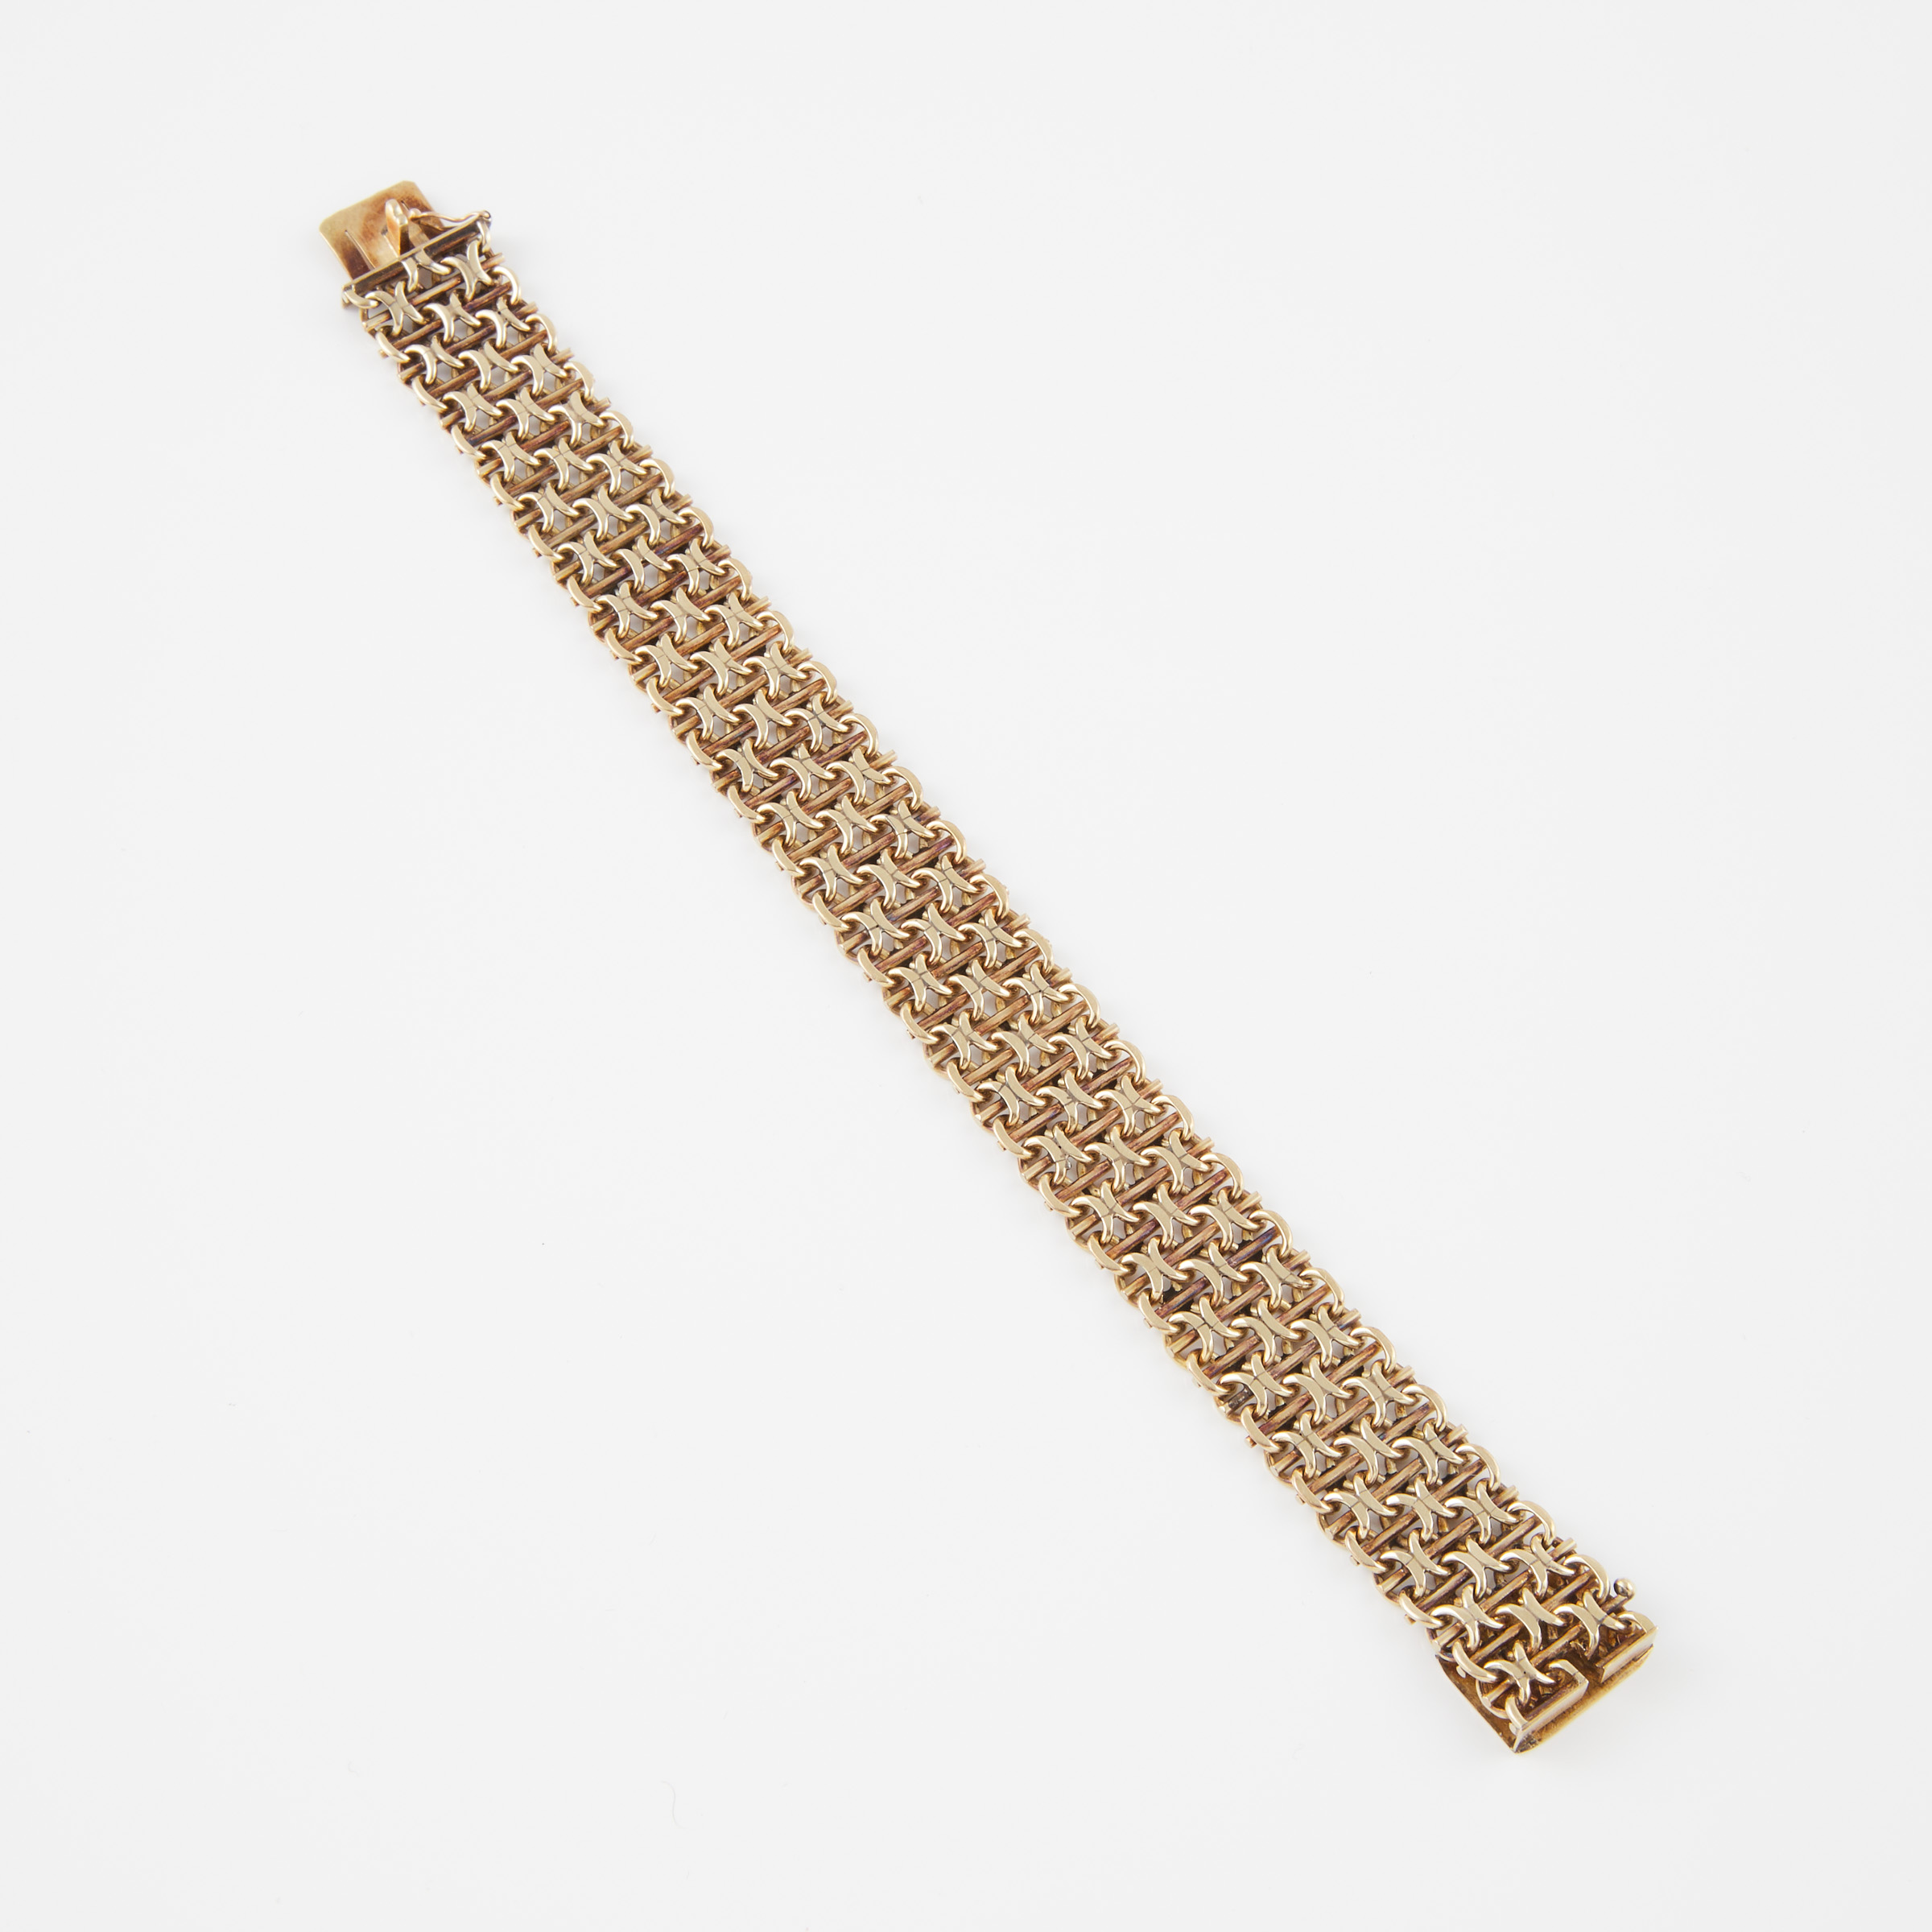 Hungarian 14k Yellow Gold Strap Bracelet